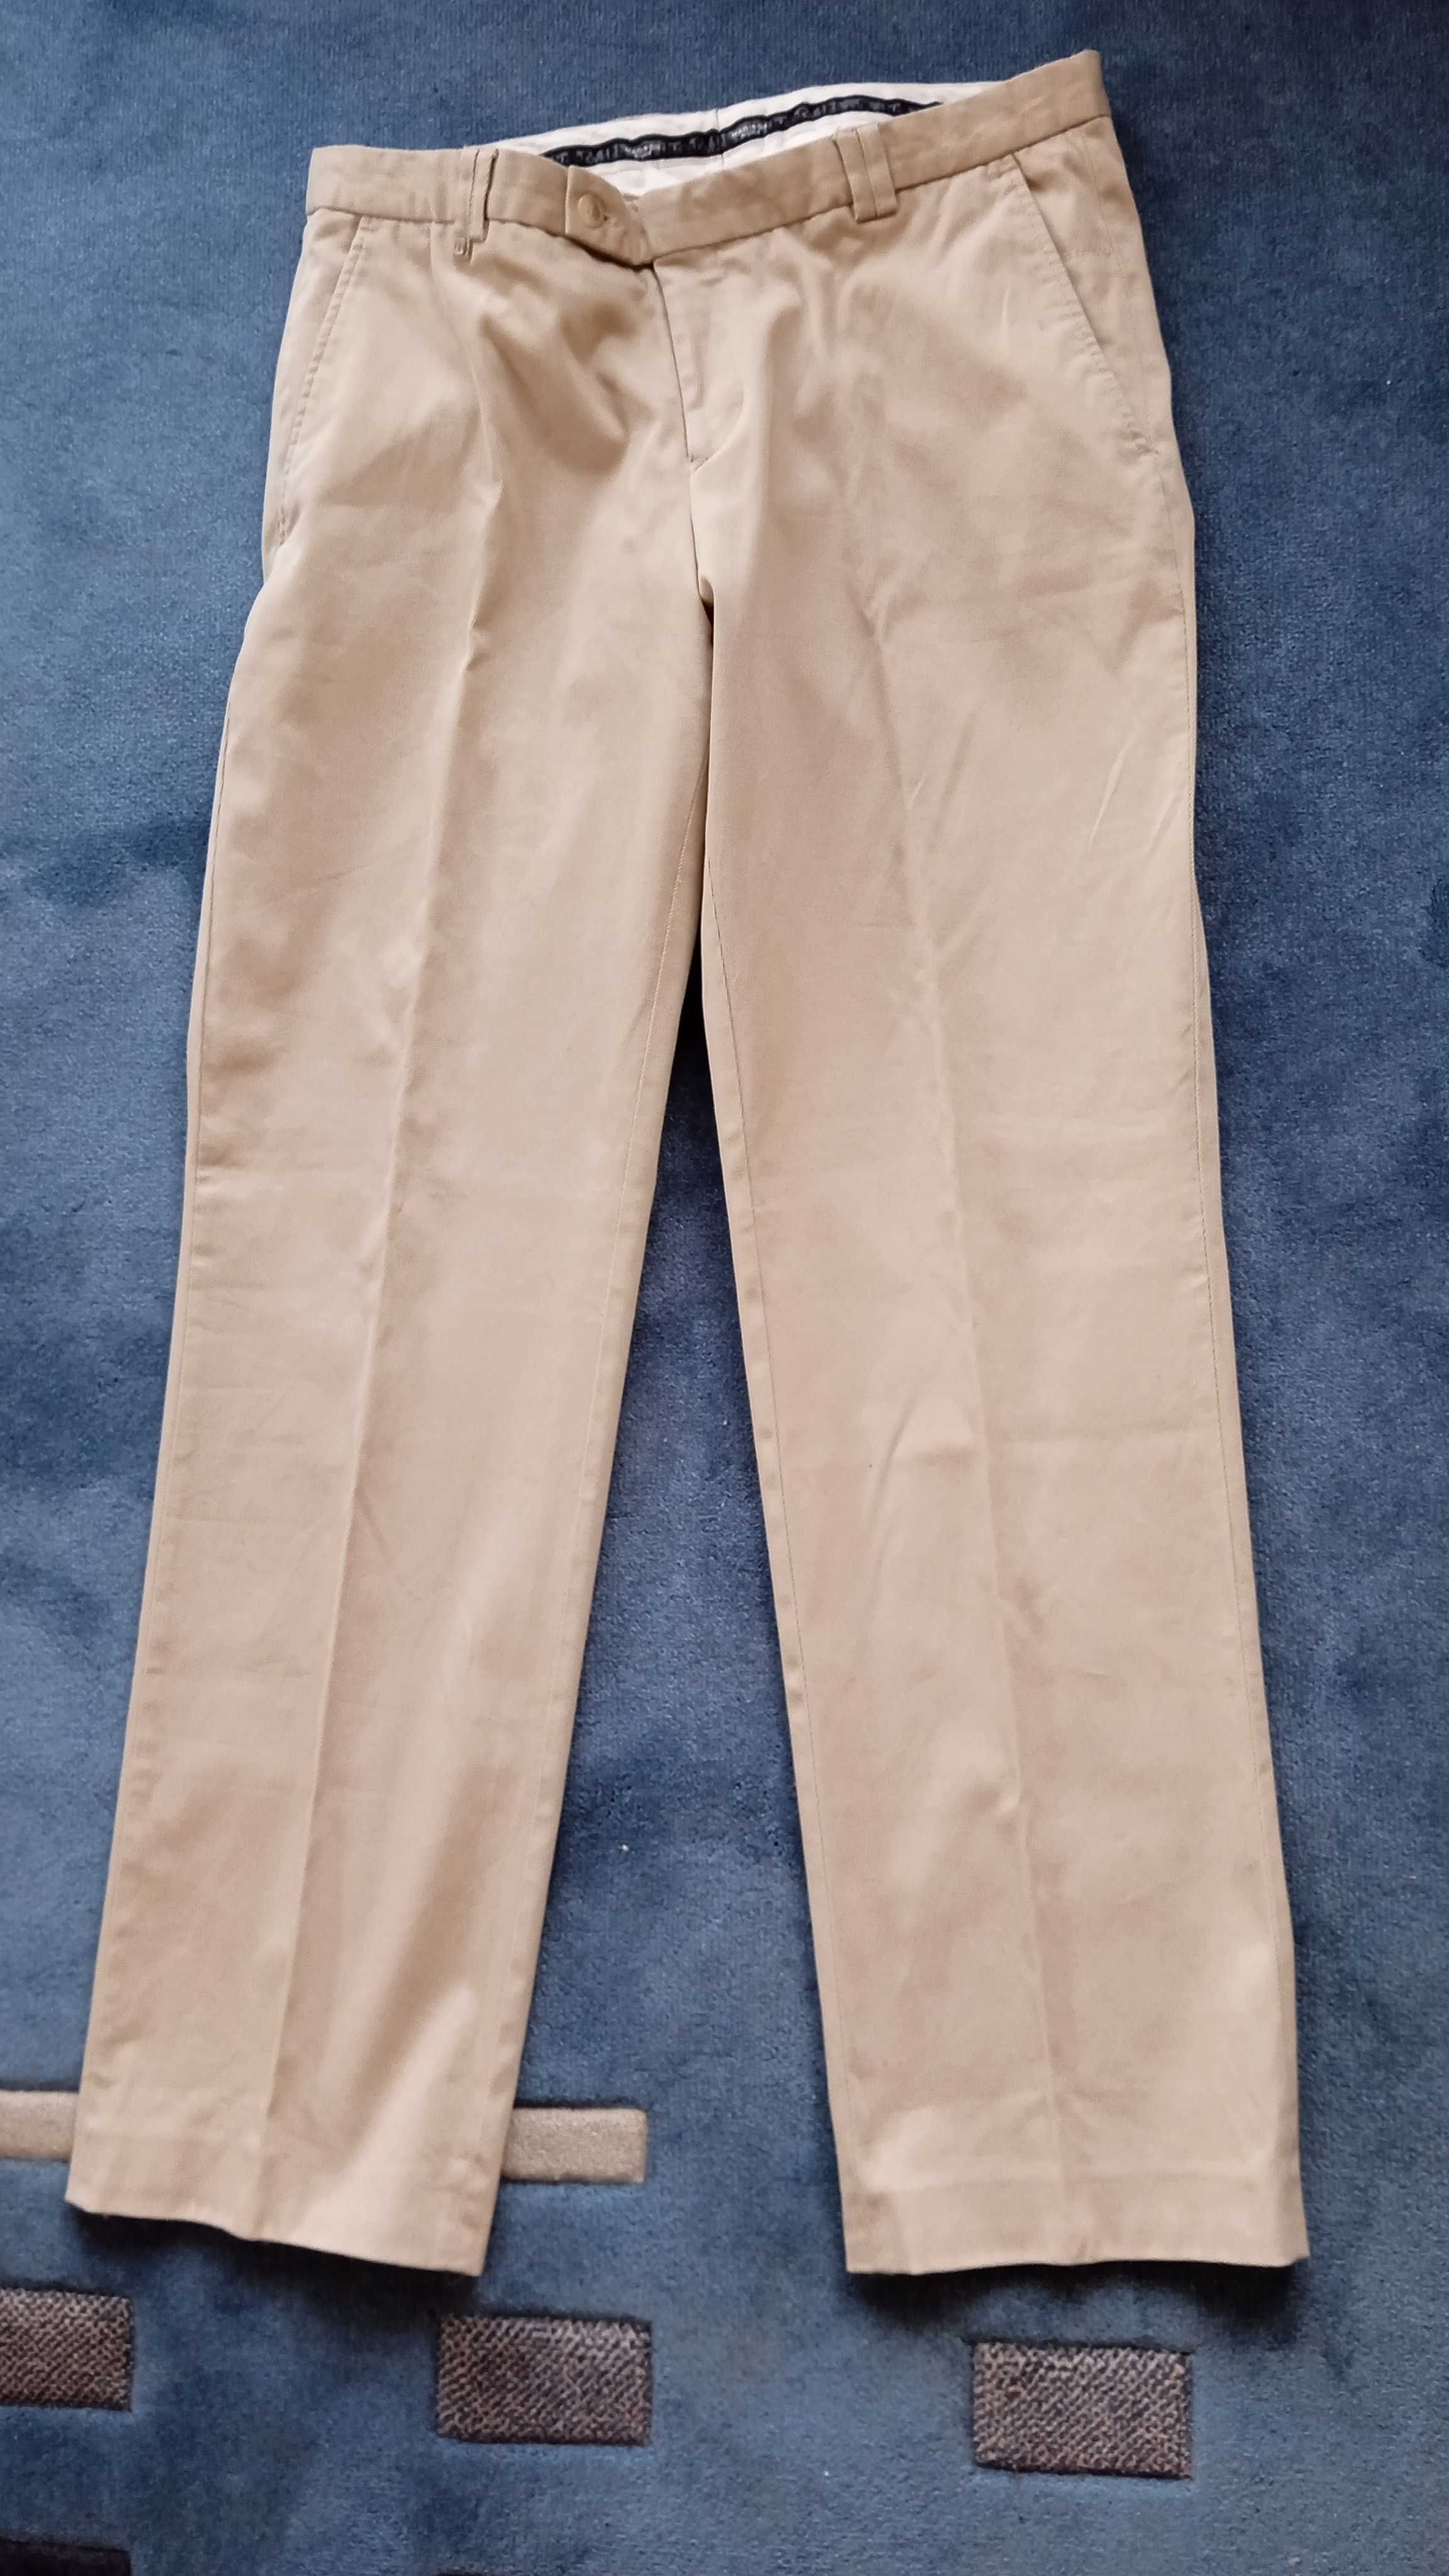 Spodnie męskie Medison Avenue, rozmiar 52, kolor beżowy.